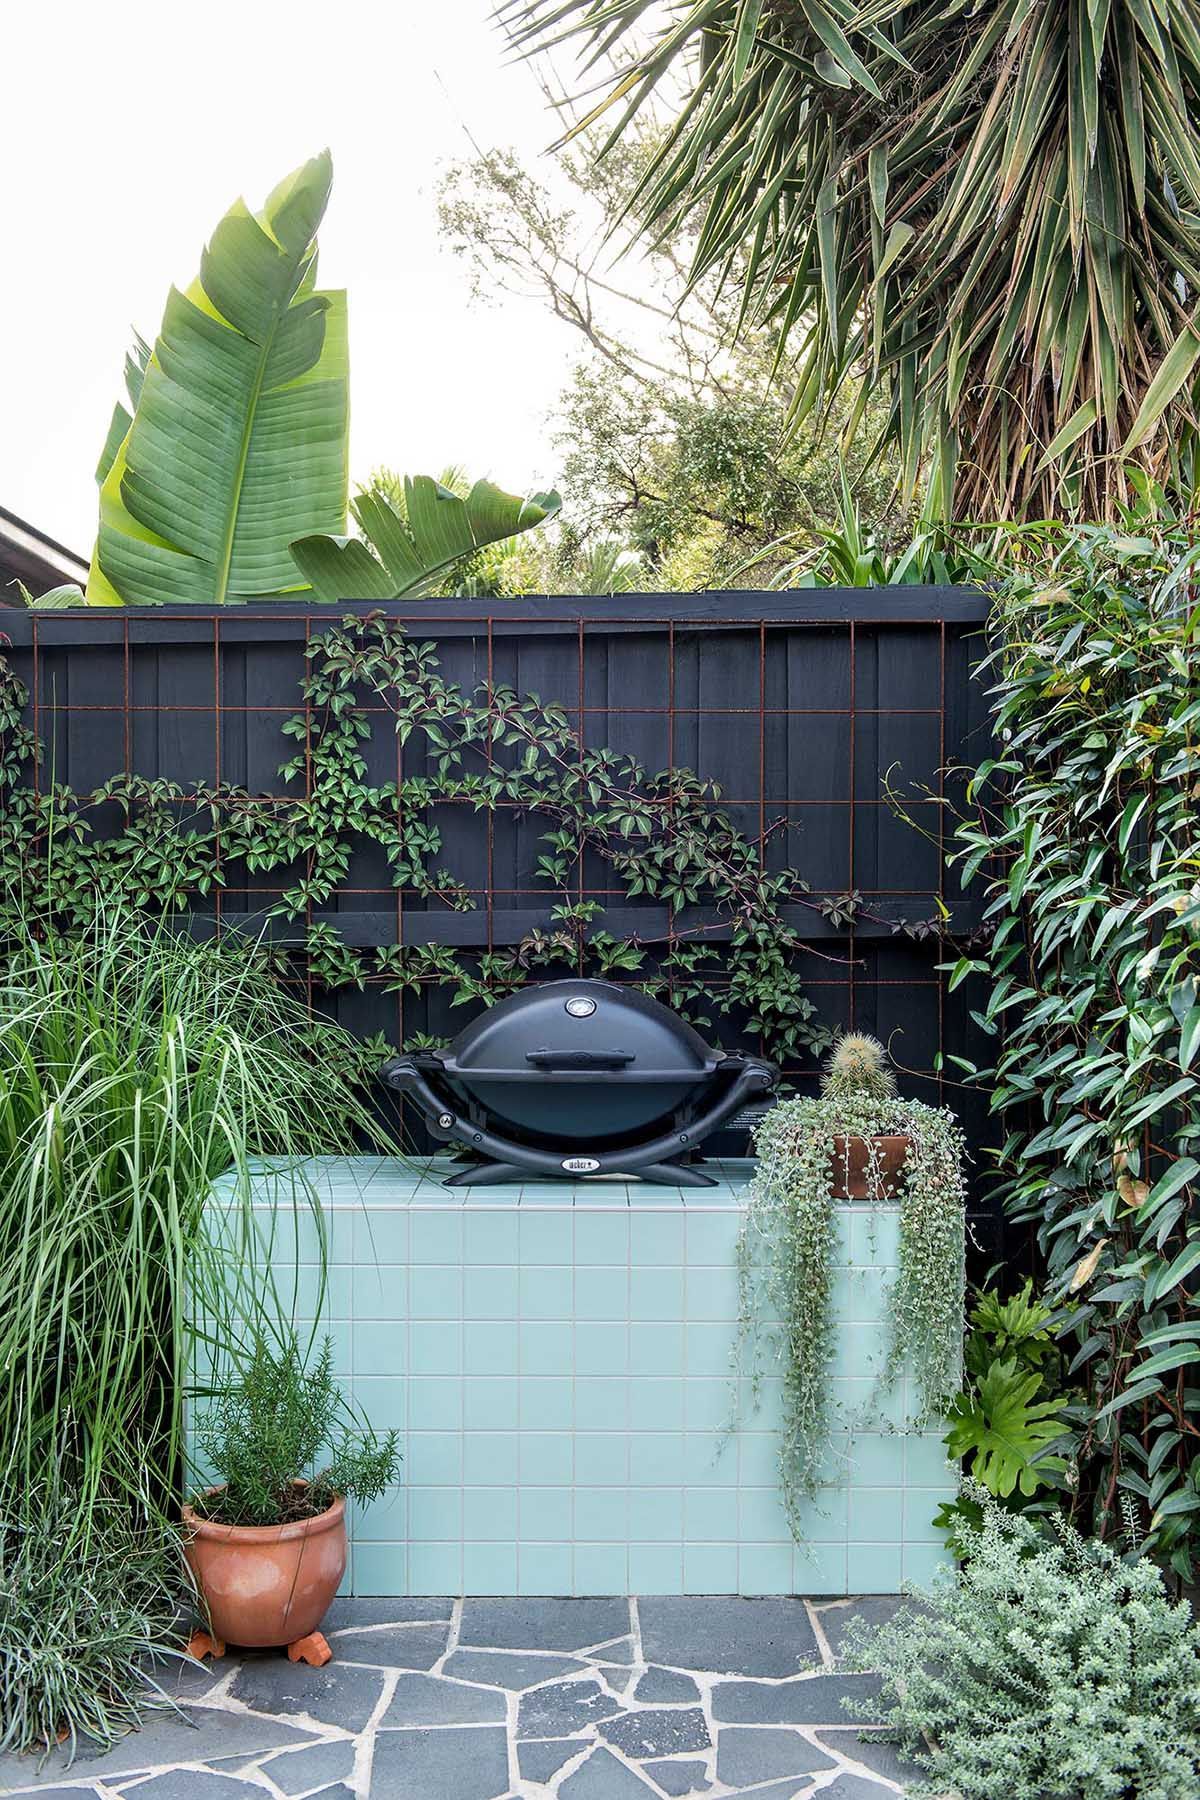 Creating a Cozy Outdoor Oasis: Tips for Designing a Petite Garden Space